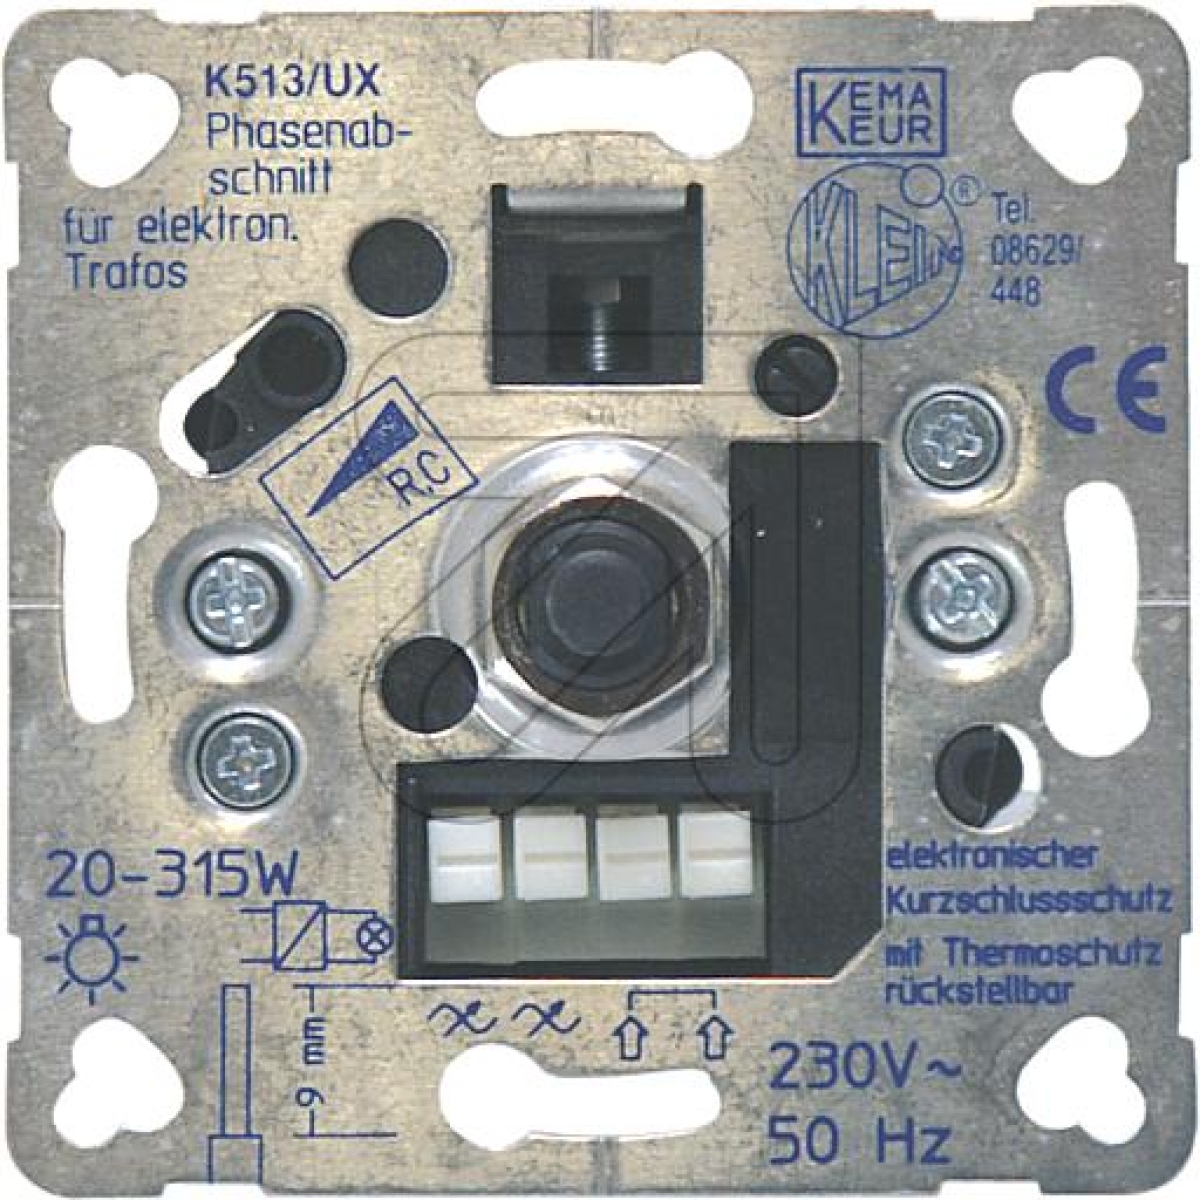 KleinPhasenabschnitts-Dimmer K513/UX alternativ: 100669Artikel-Nr: 090280